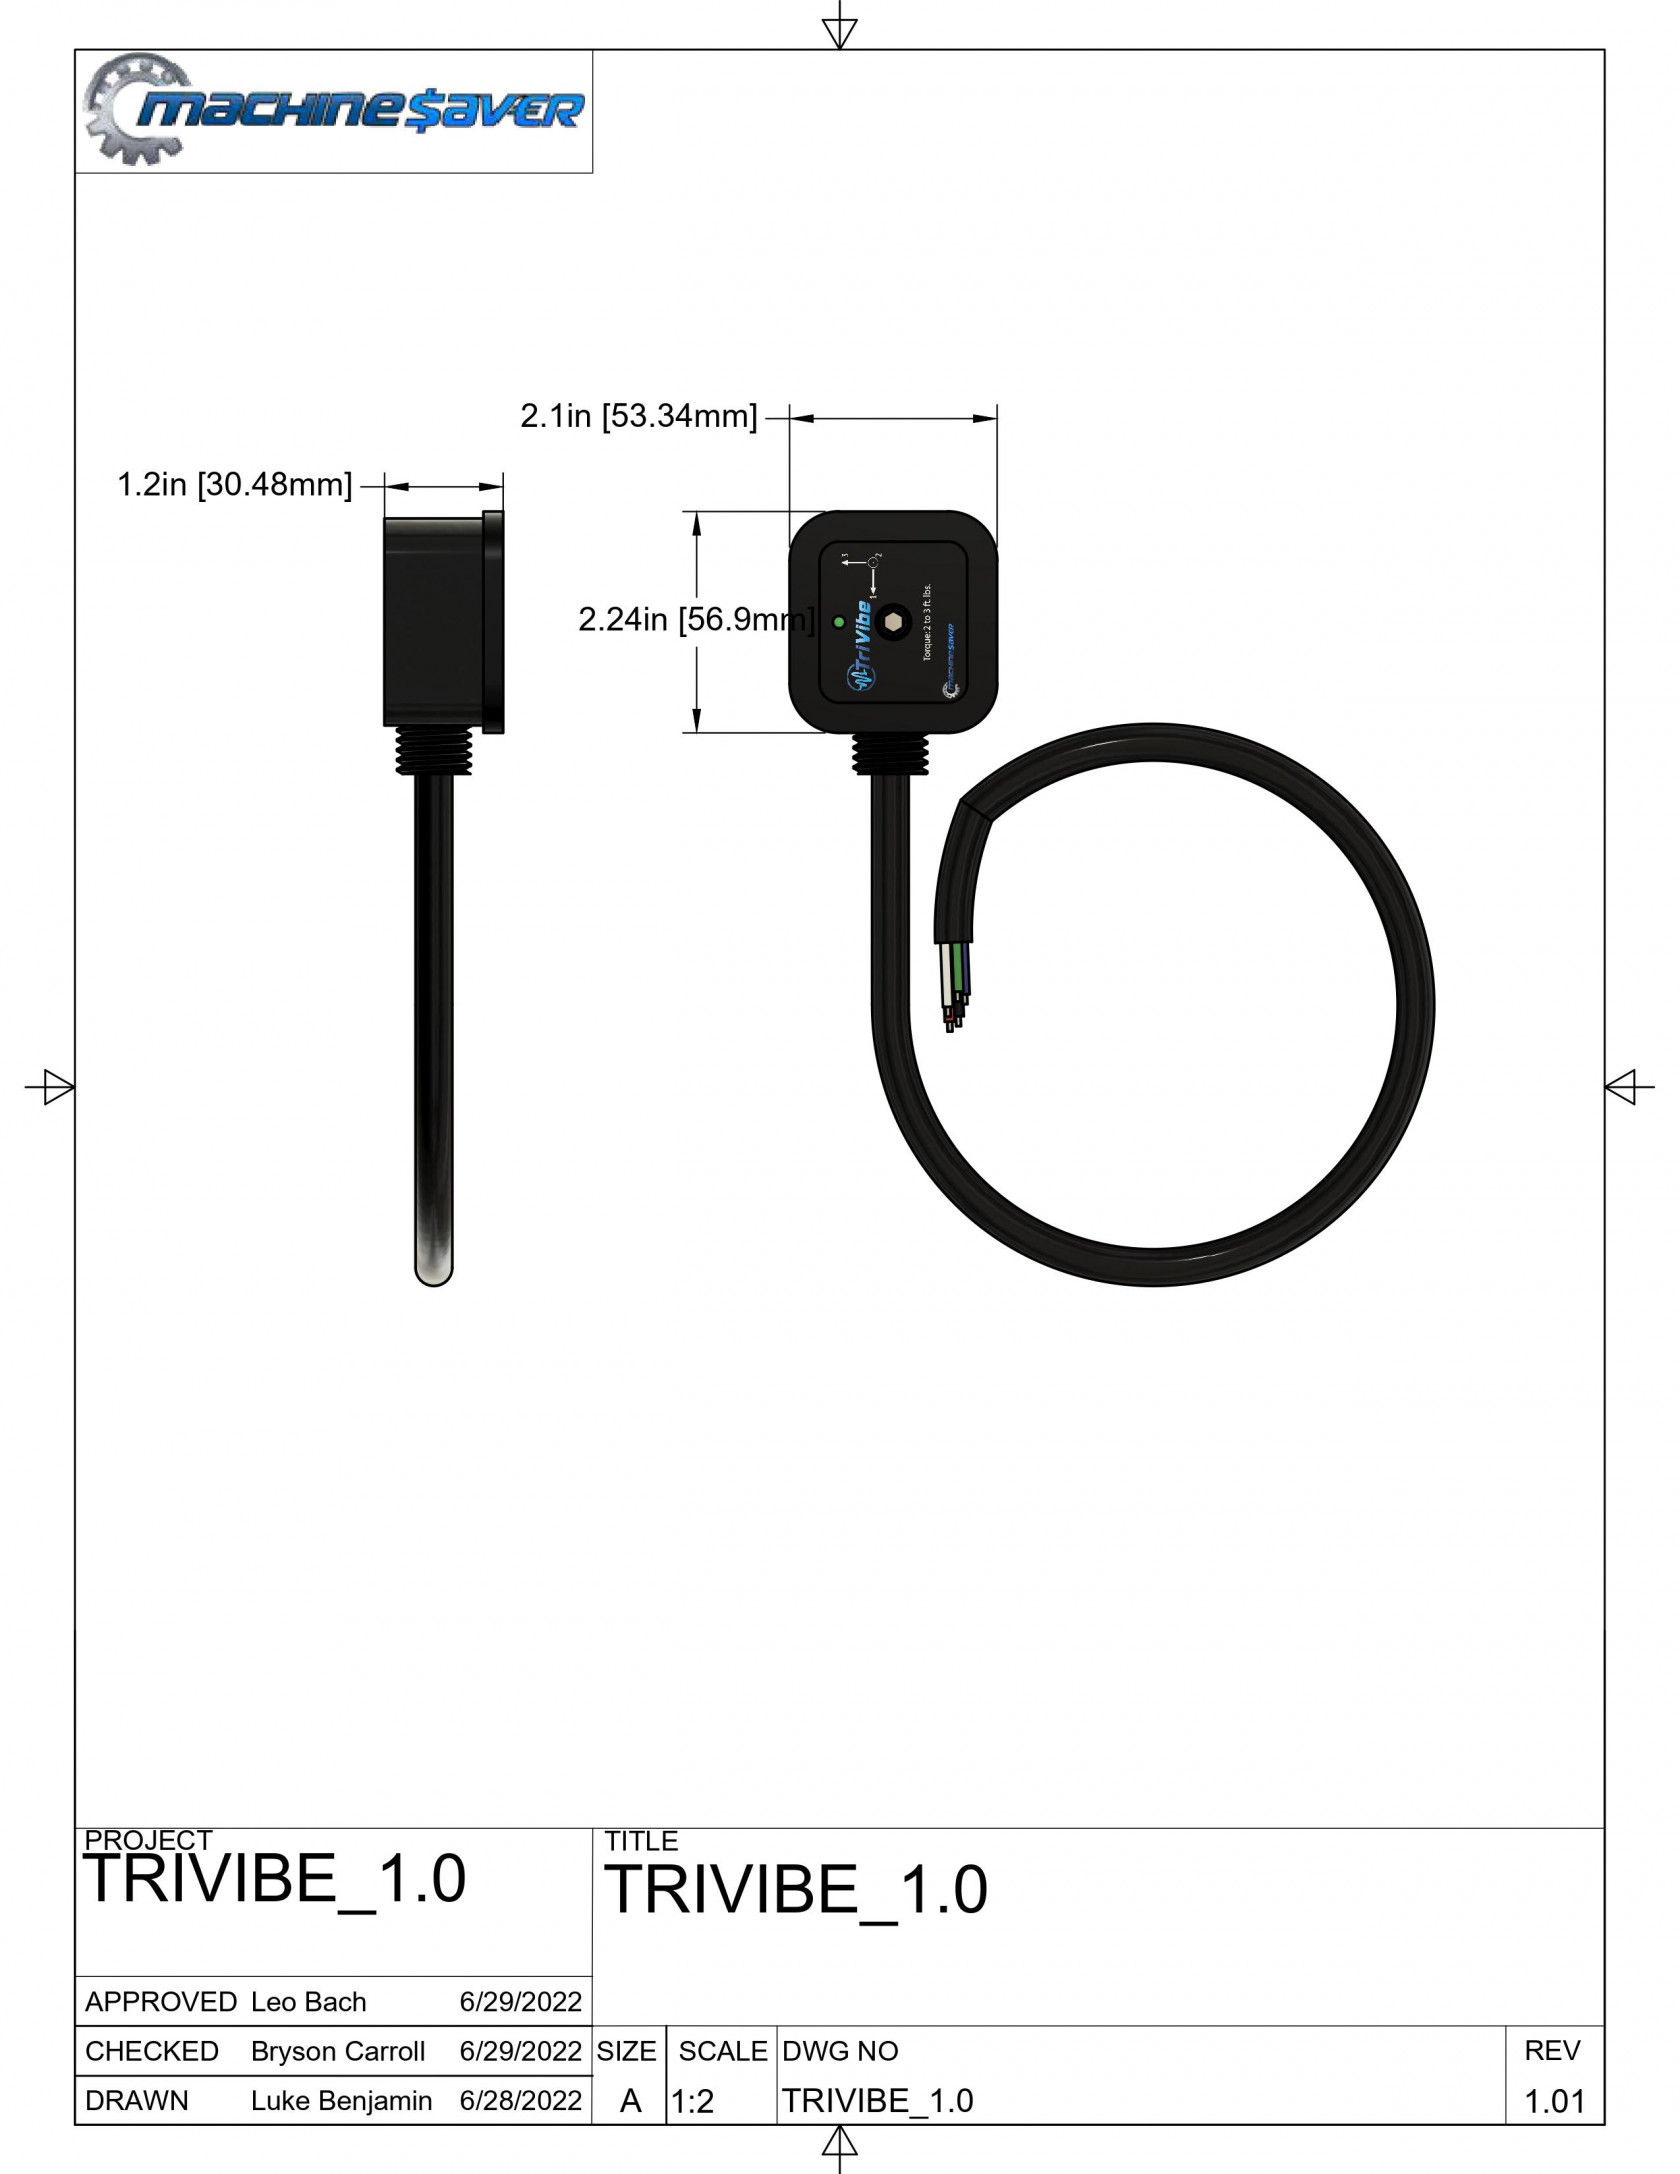 TriVibe_1.0_Drawing v2.jpg